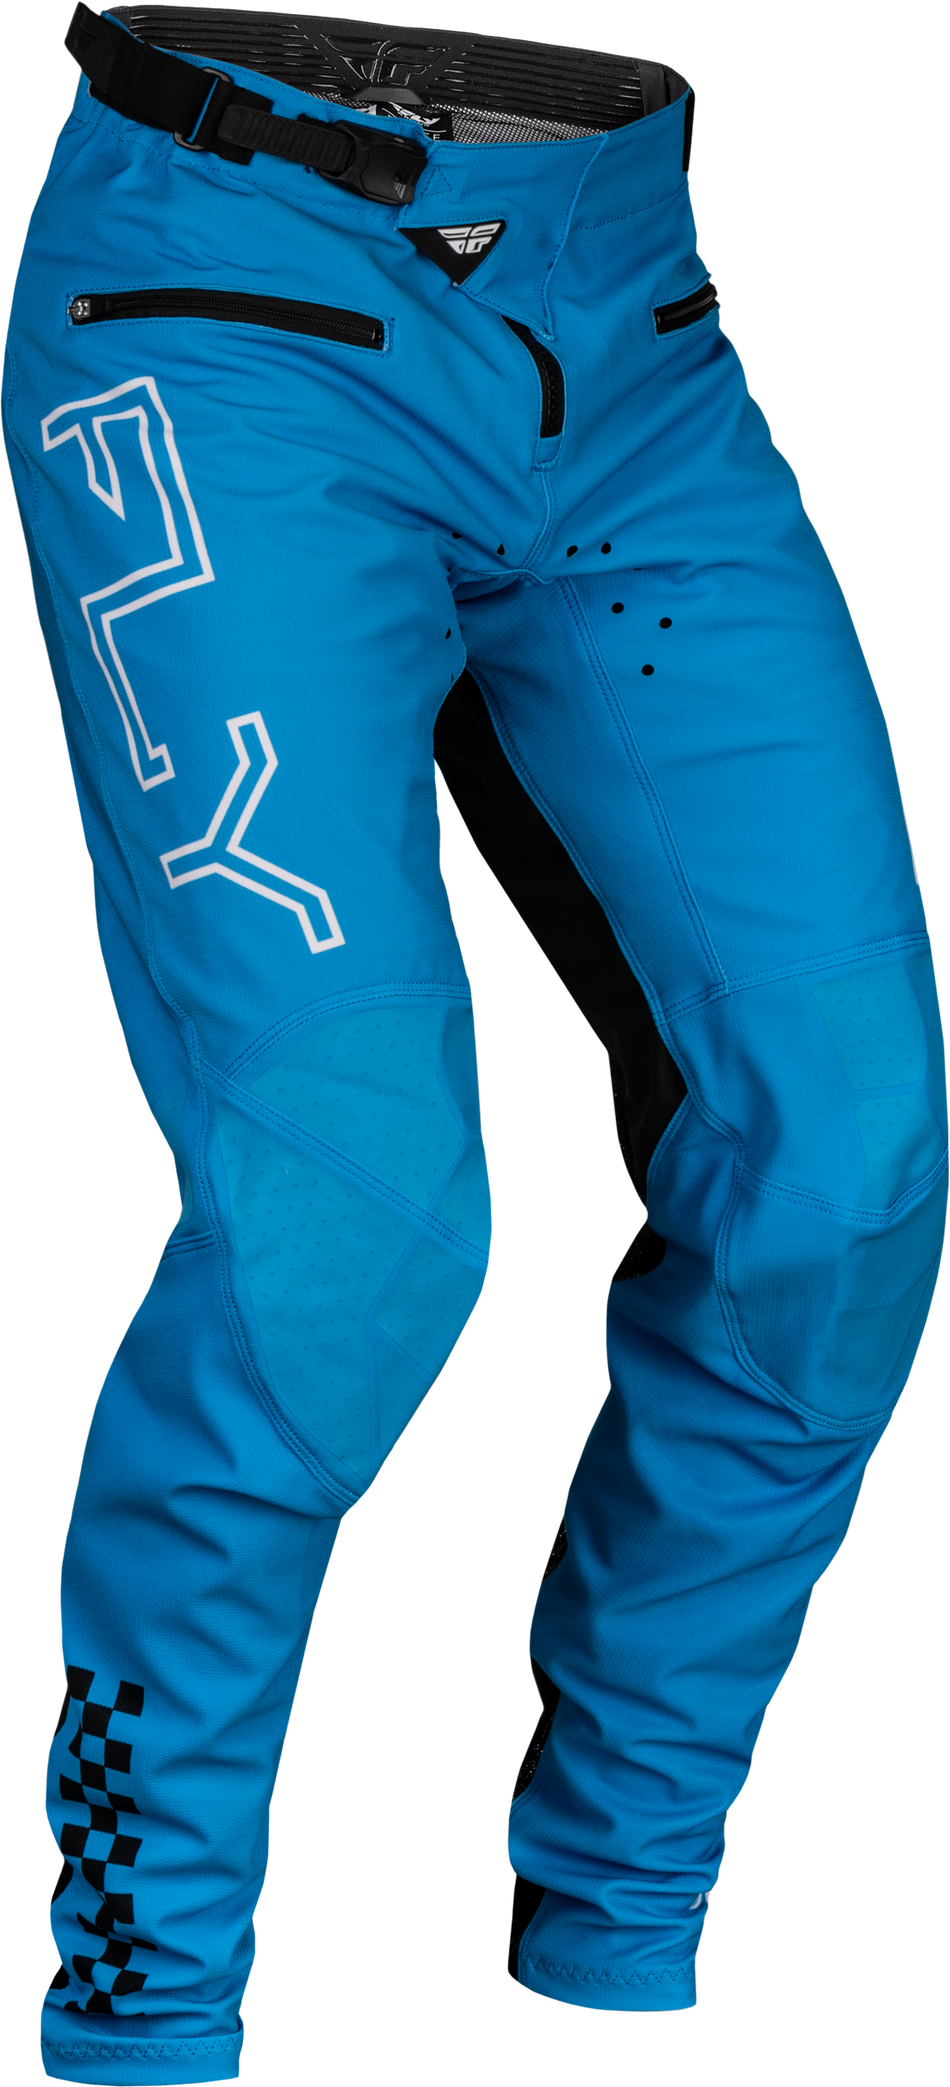 FLY RACING Rayce Bicycle Pants Blue Sz 34 377-06234